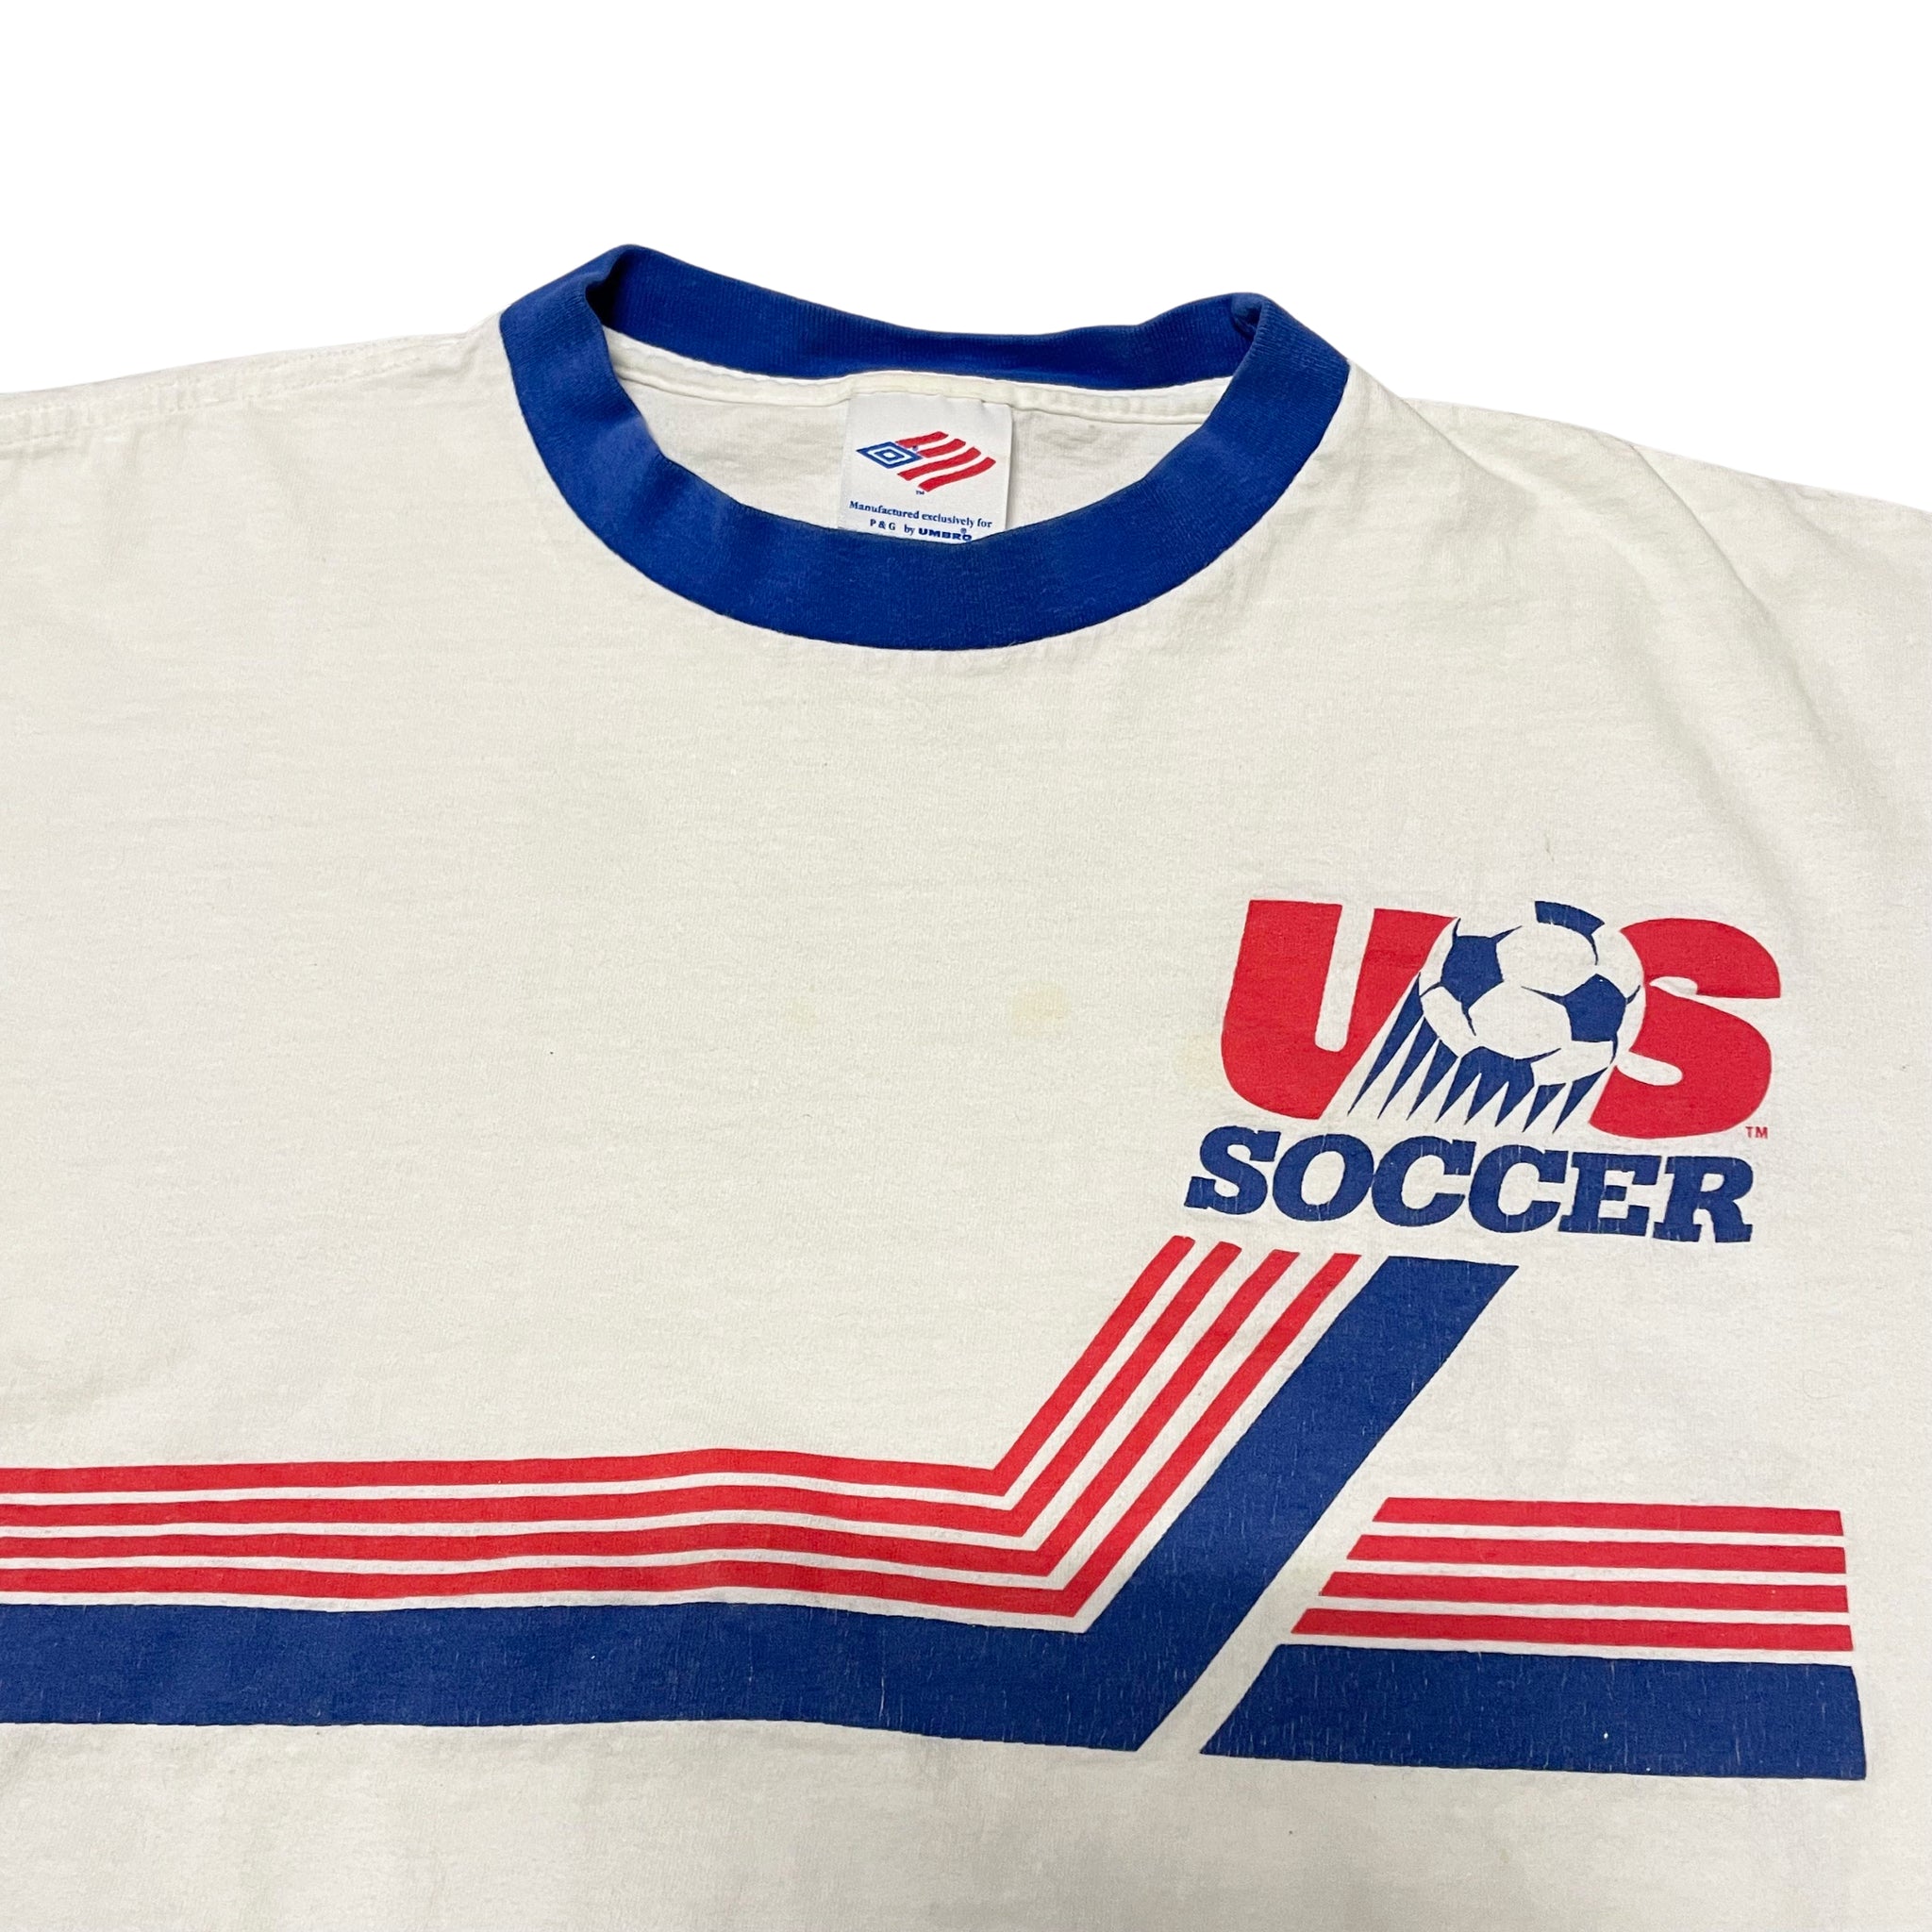 Umbro US Soccer Shirt - XL